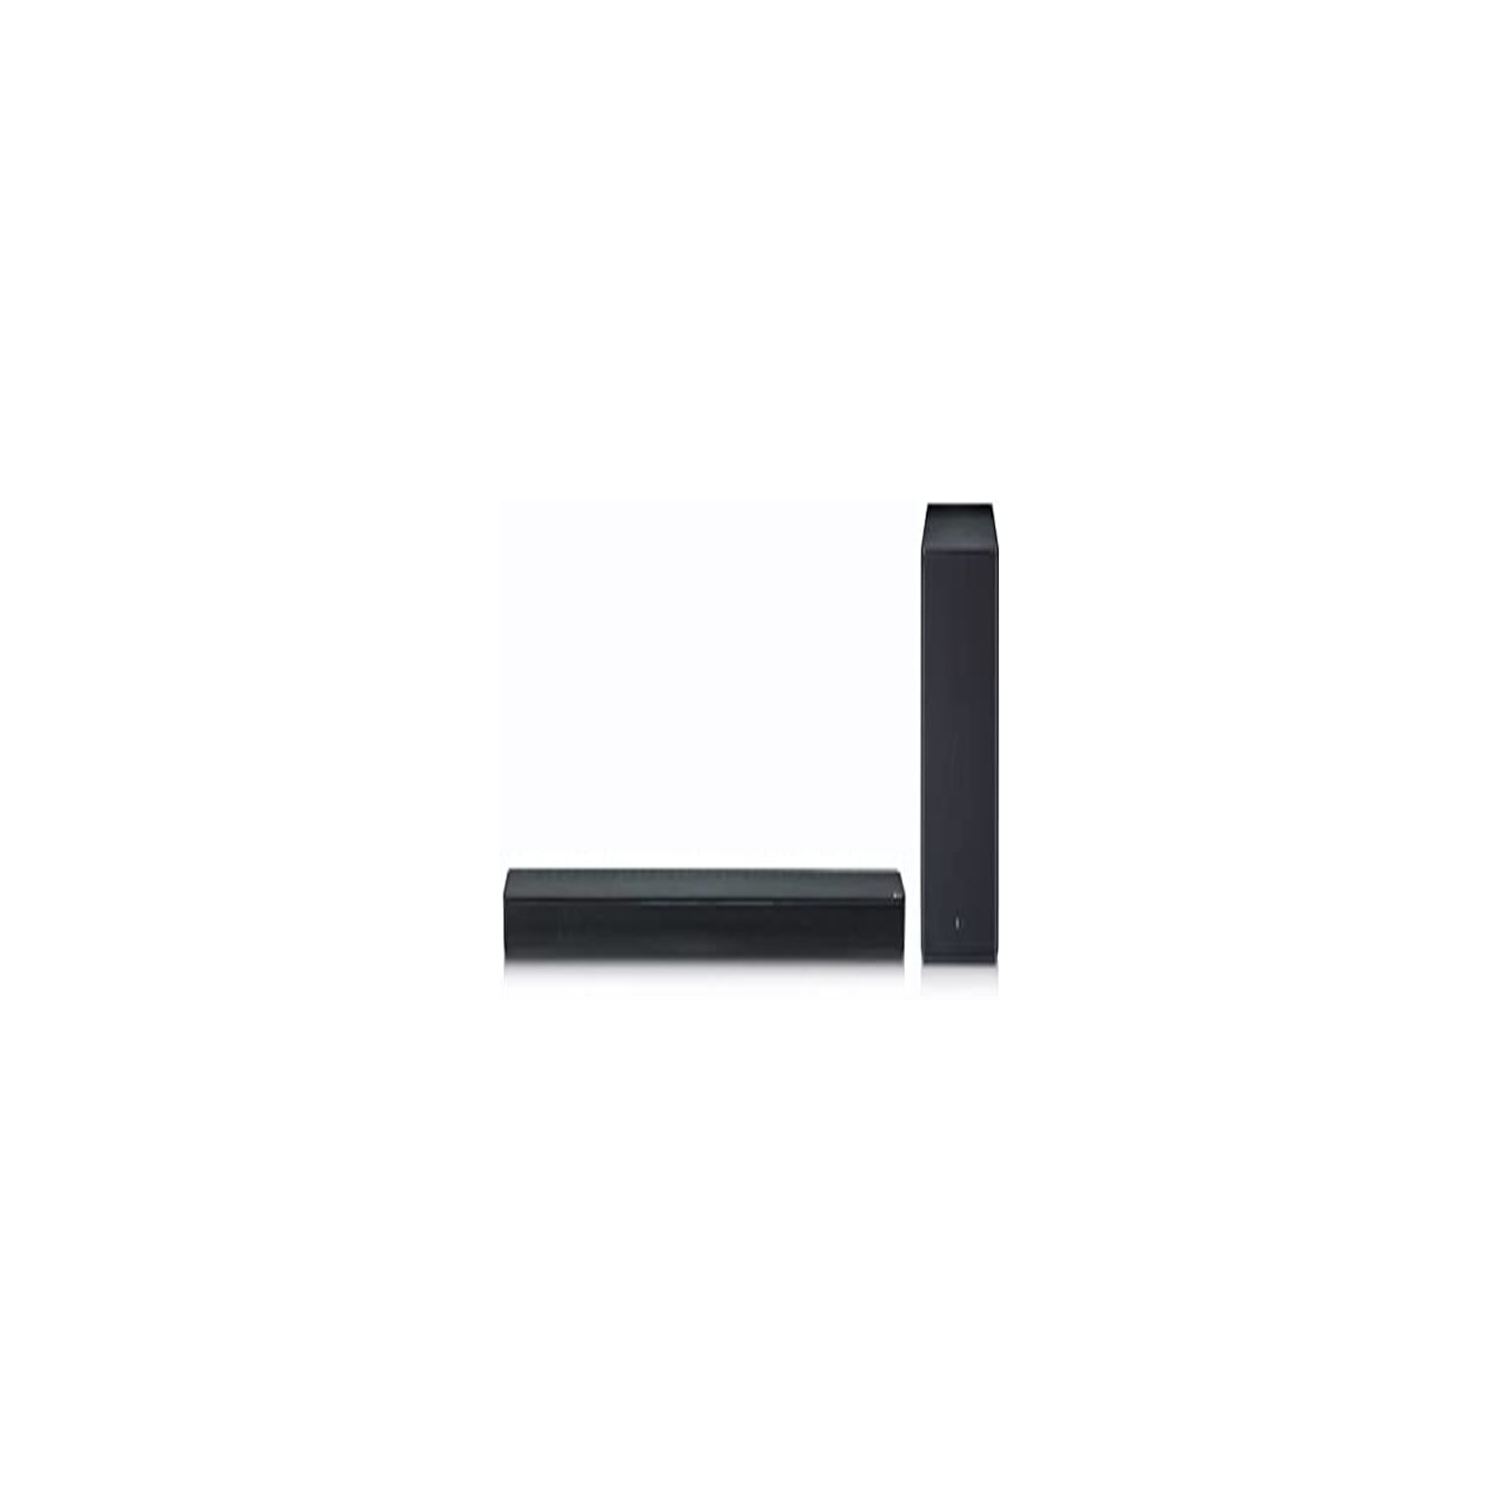 LG SK8Y Sound Bar 2.1 ch High Res Audio, Dolby Atmos, Chromecast, Surround Sound Ready, Google Assistant - Black